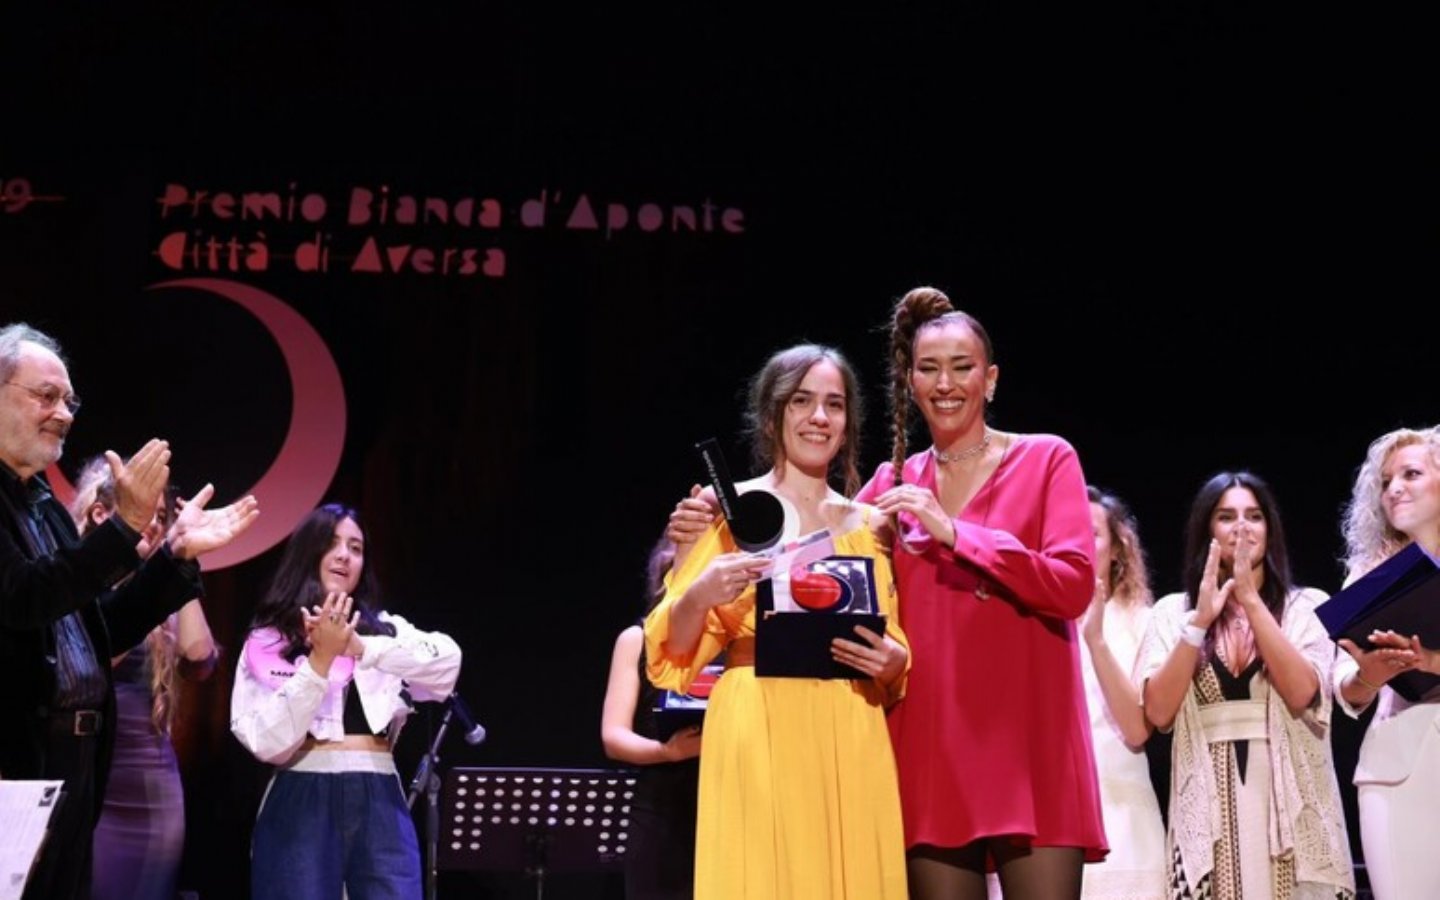 Premio Bianca d'Aponte